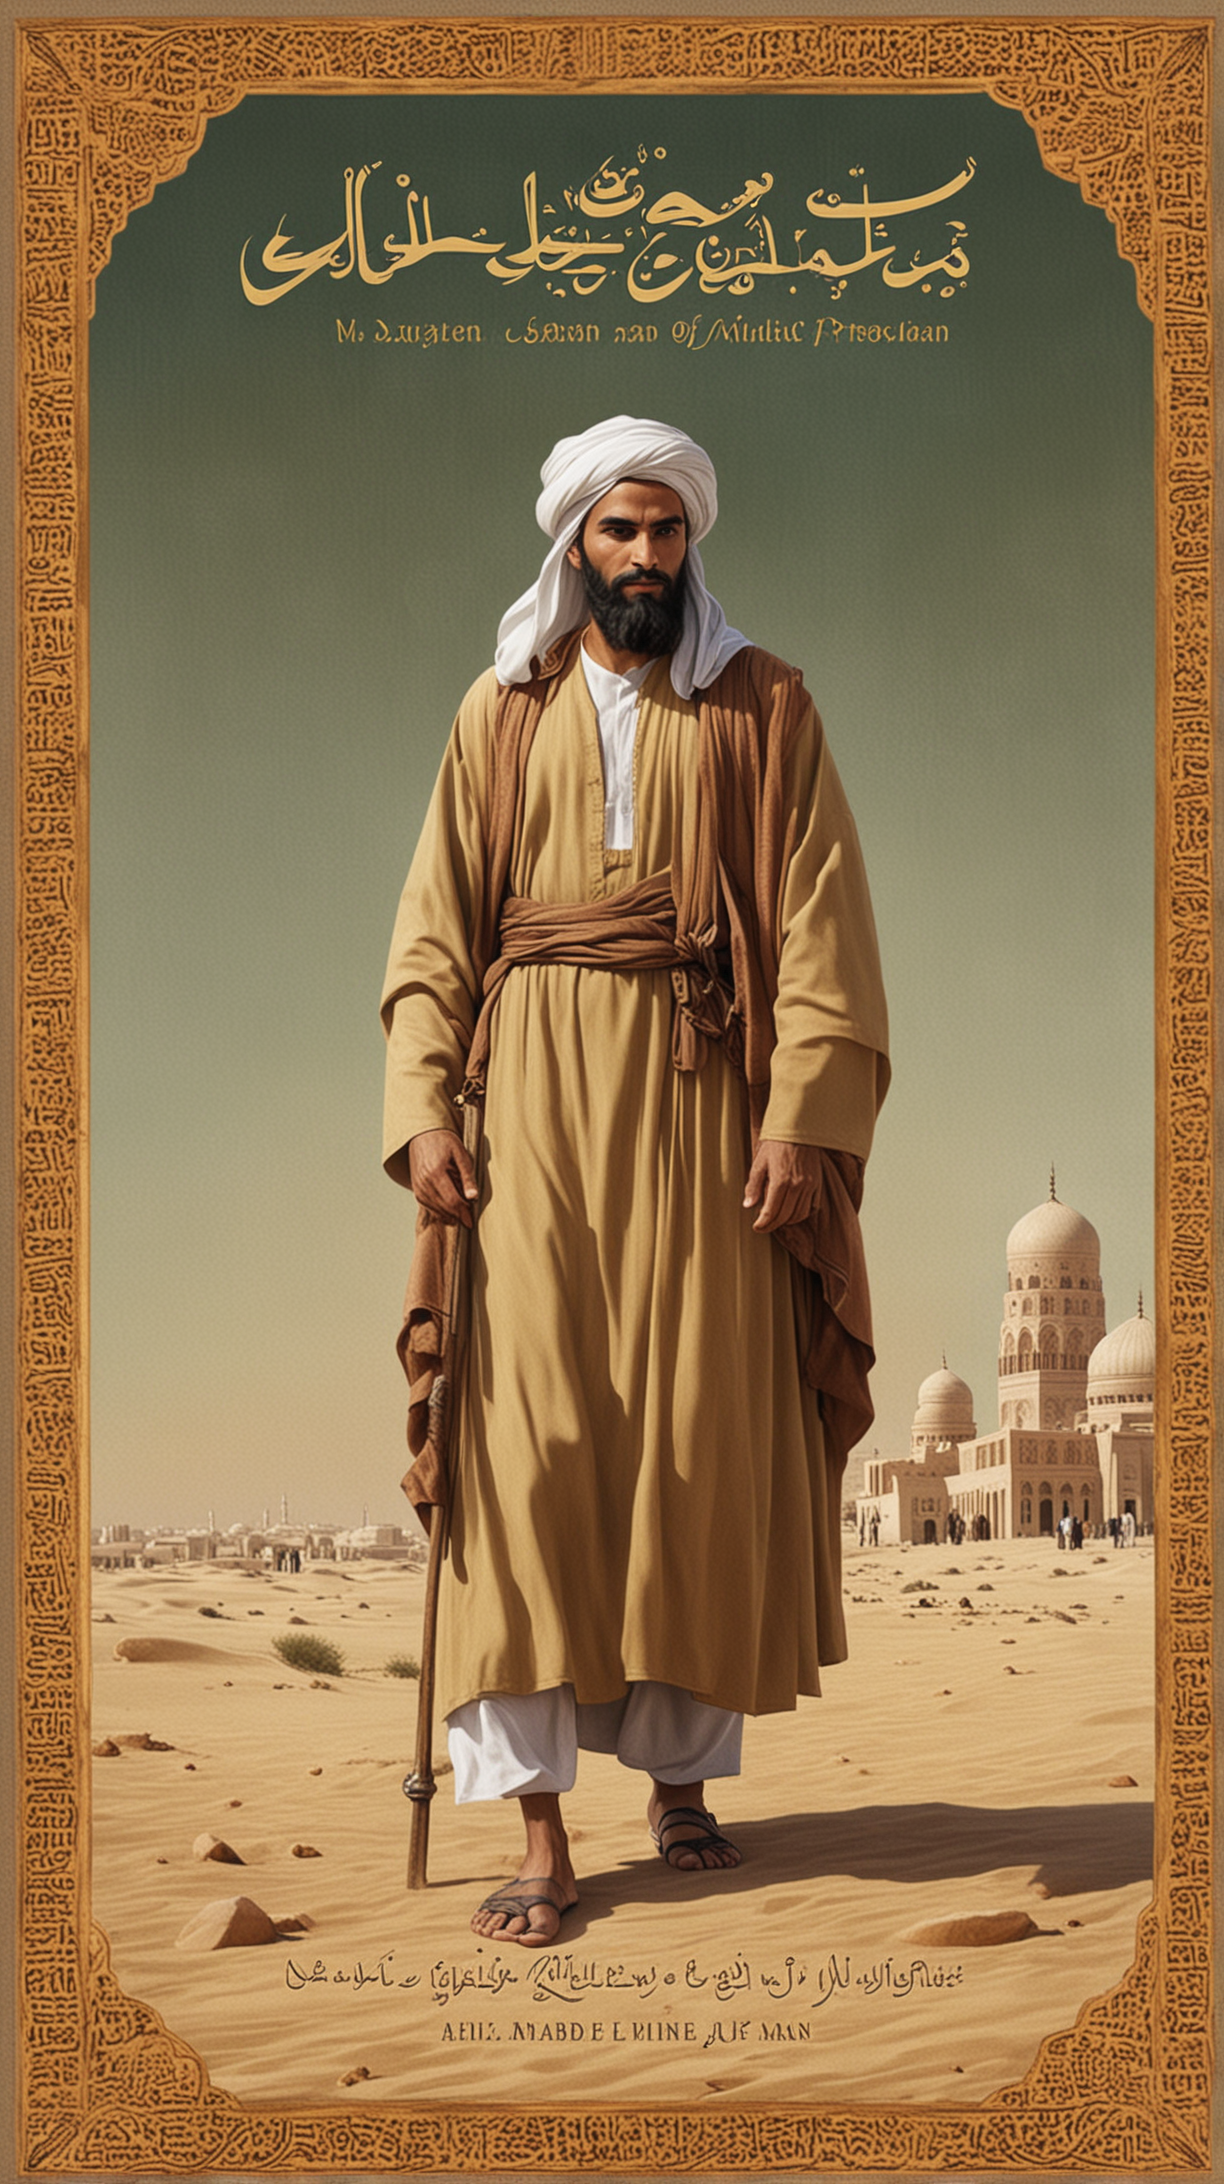 a companion of prophet , a Muslim man